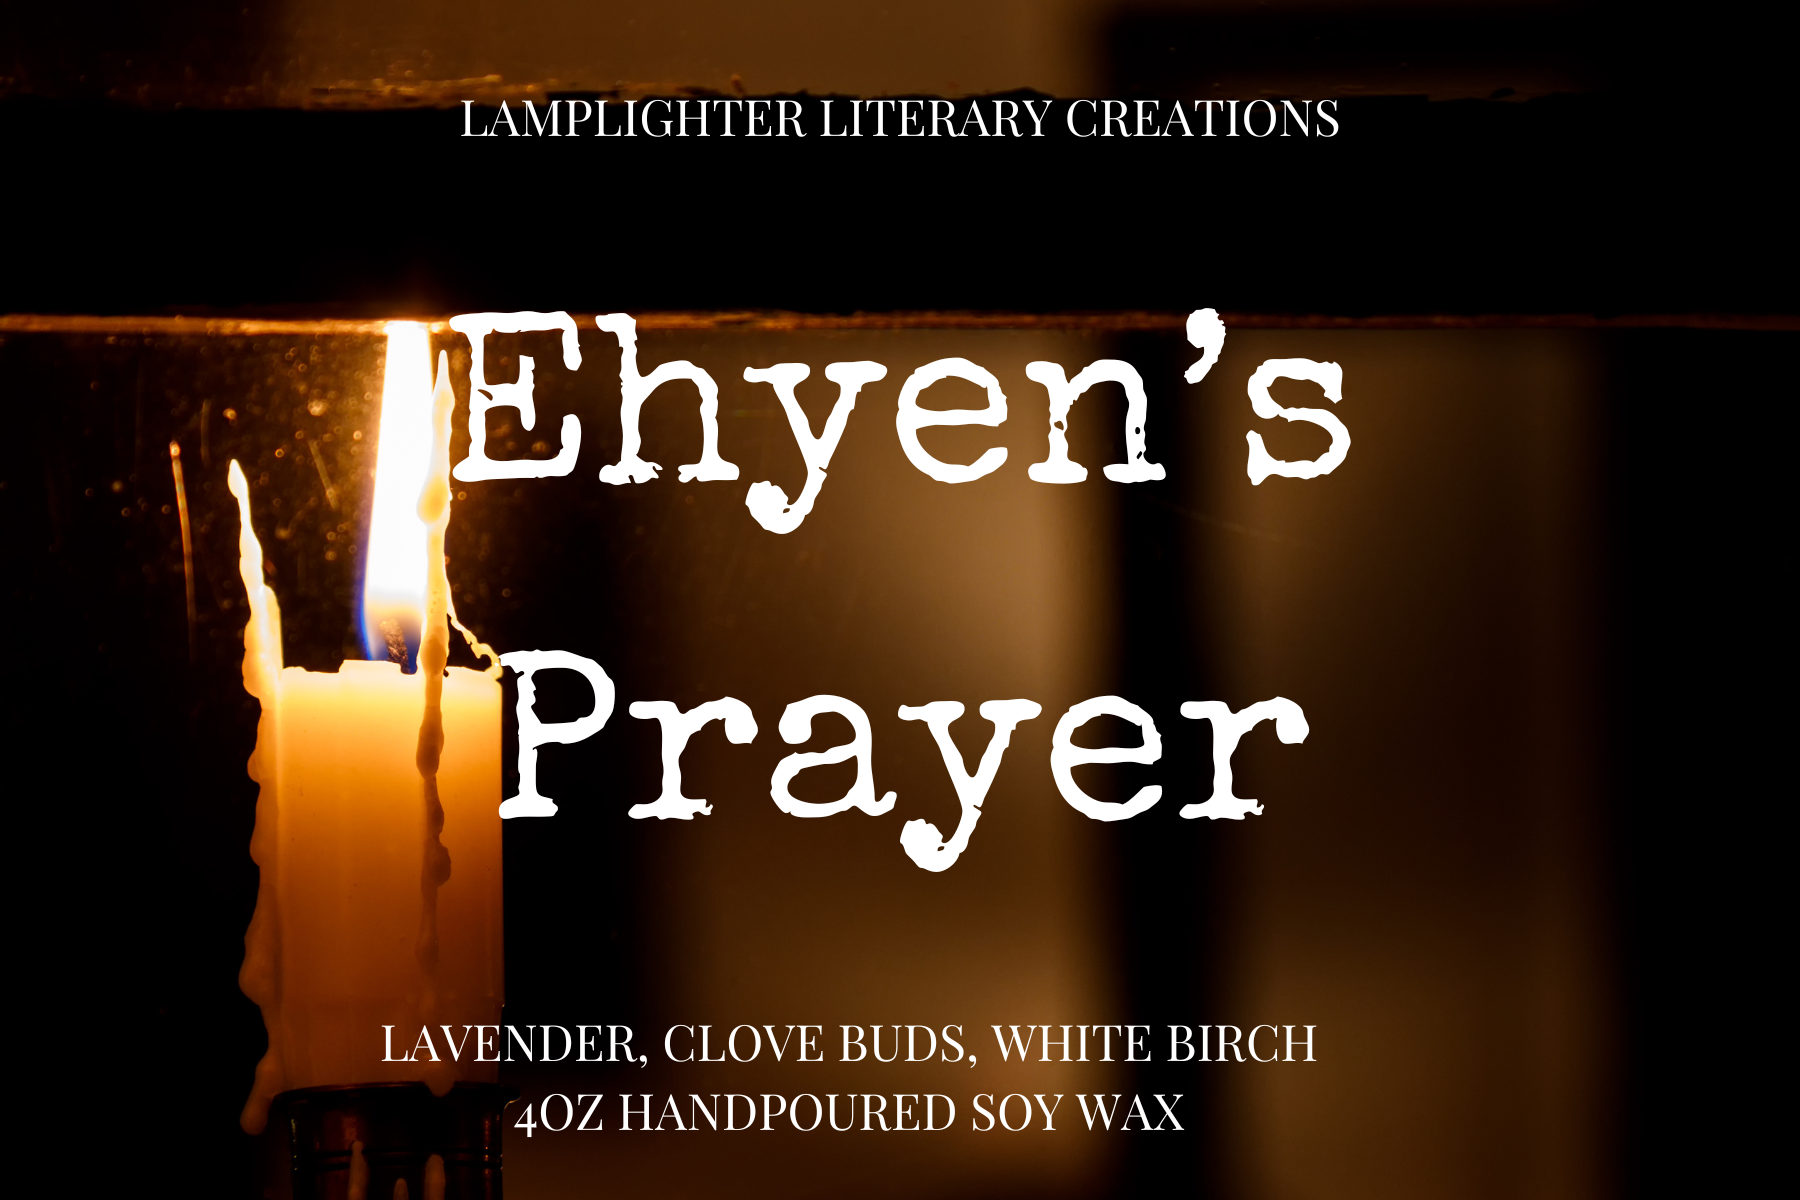 Ehyen’s Prayer